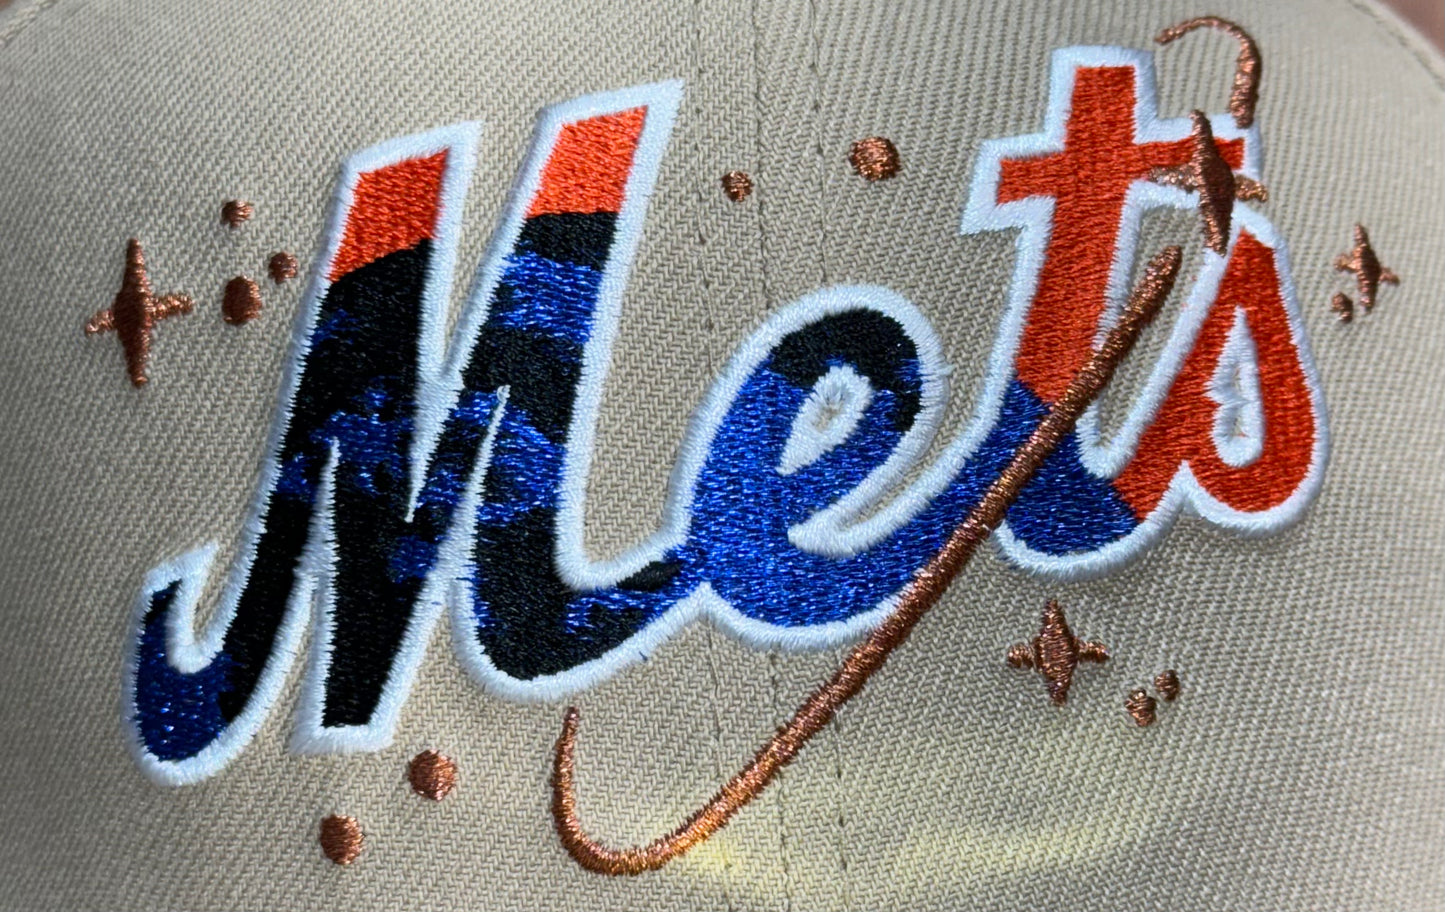 New York Mets Shea Stadium Ballpark Side Patch Fitted Hat New Era 5950 (Camel/Orange/Black/Blue/Copper)